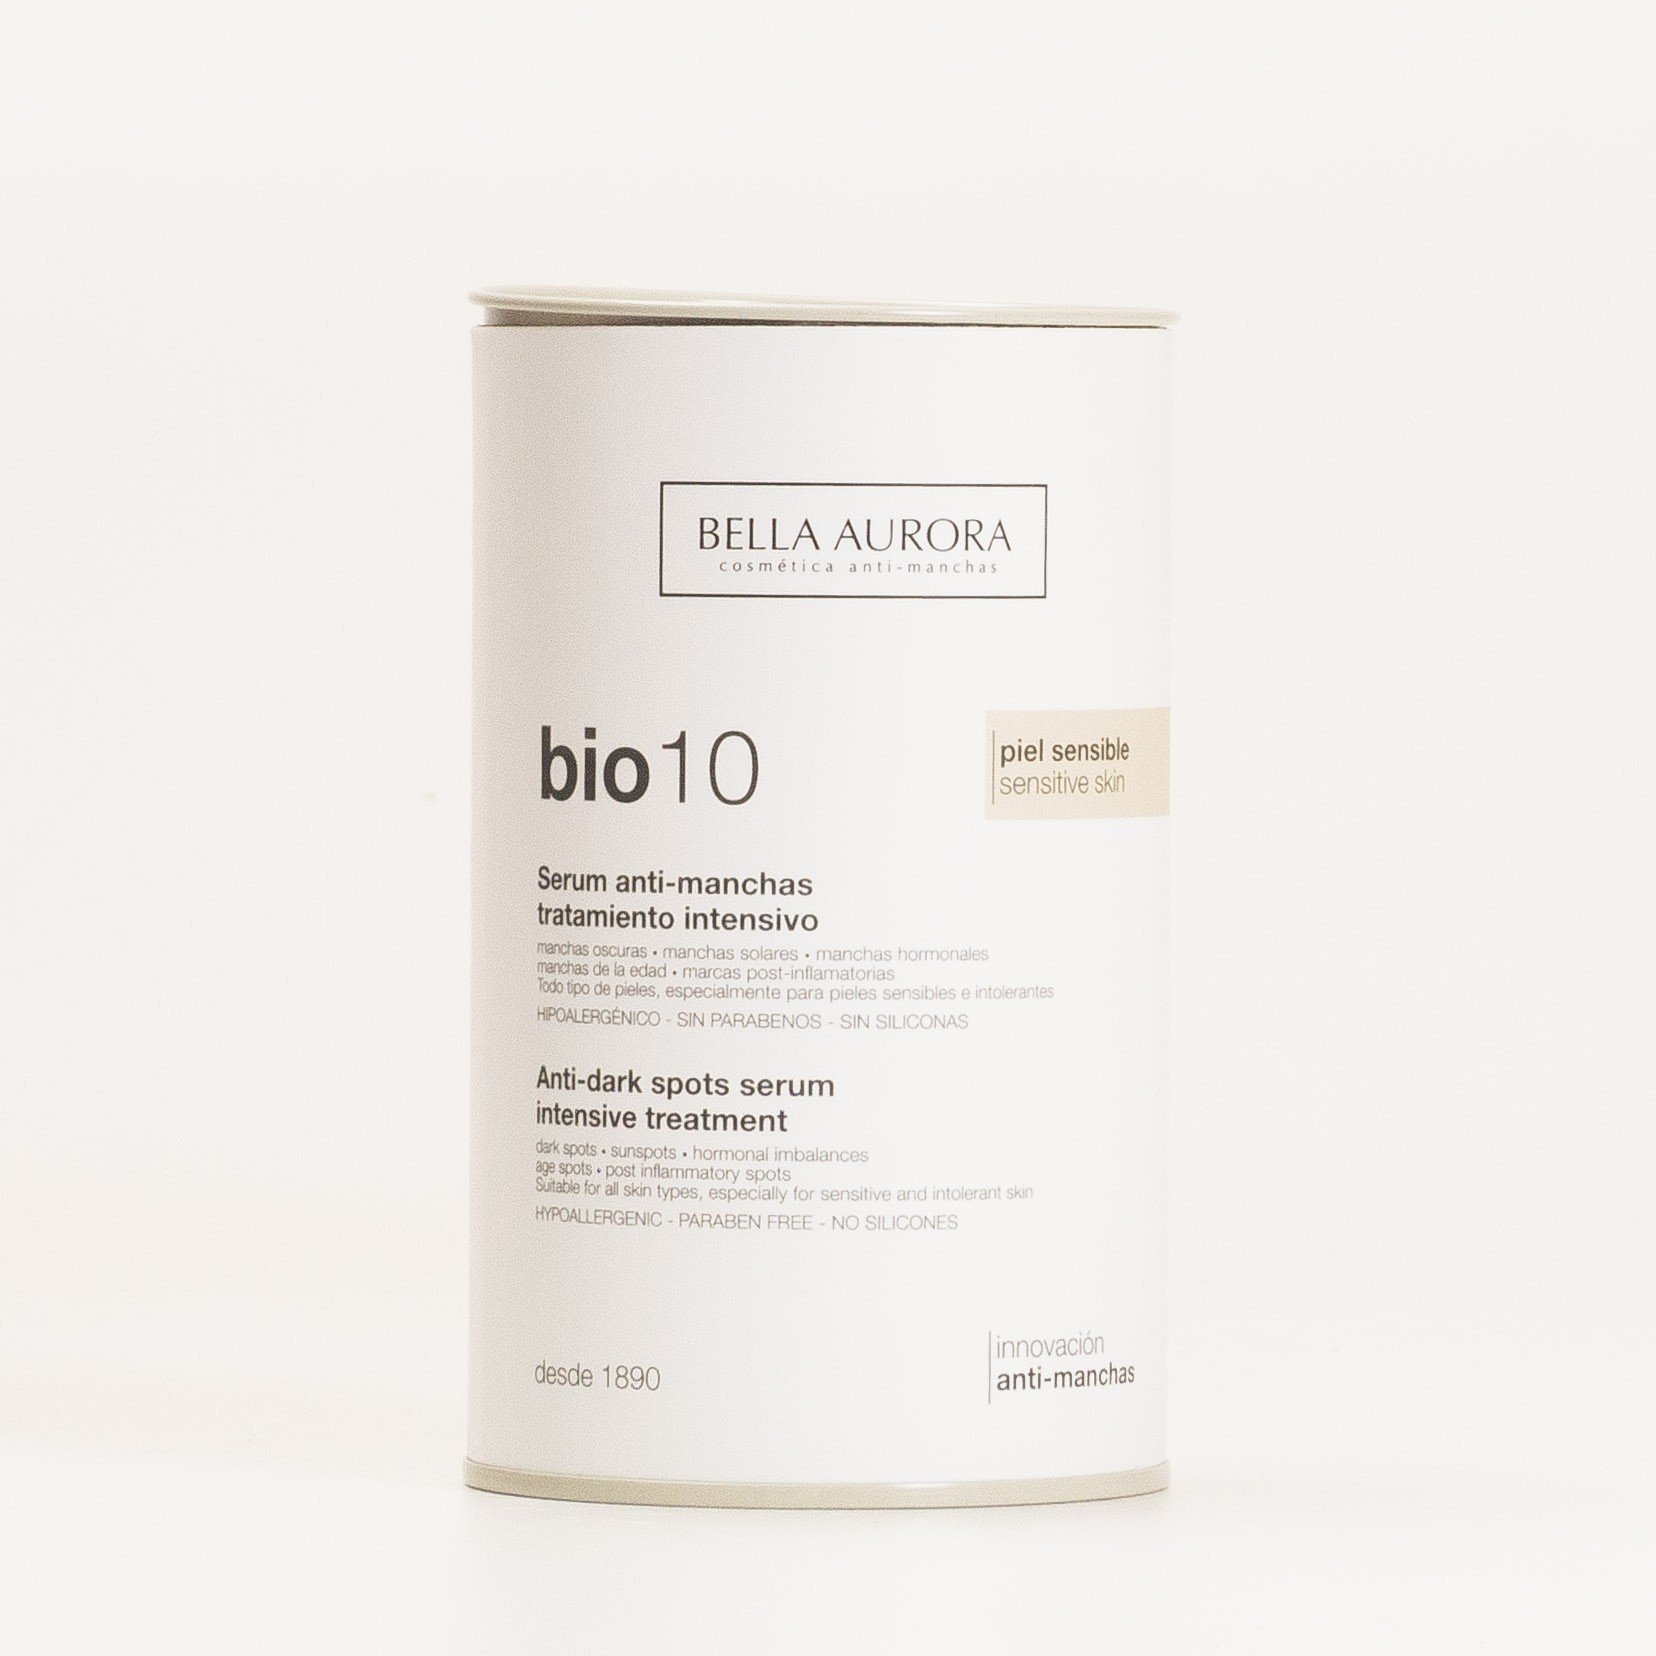 Bella Aurora Bio10 Serum Anti-manchas Piel Sensible